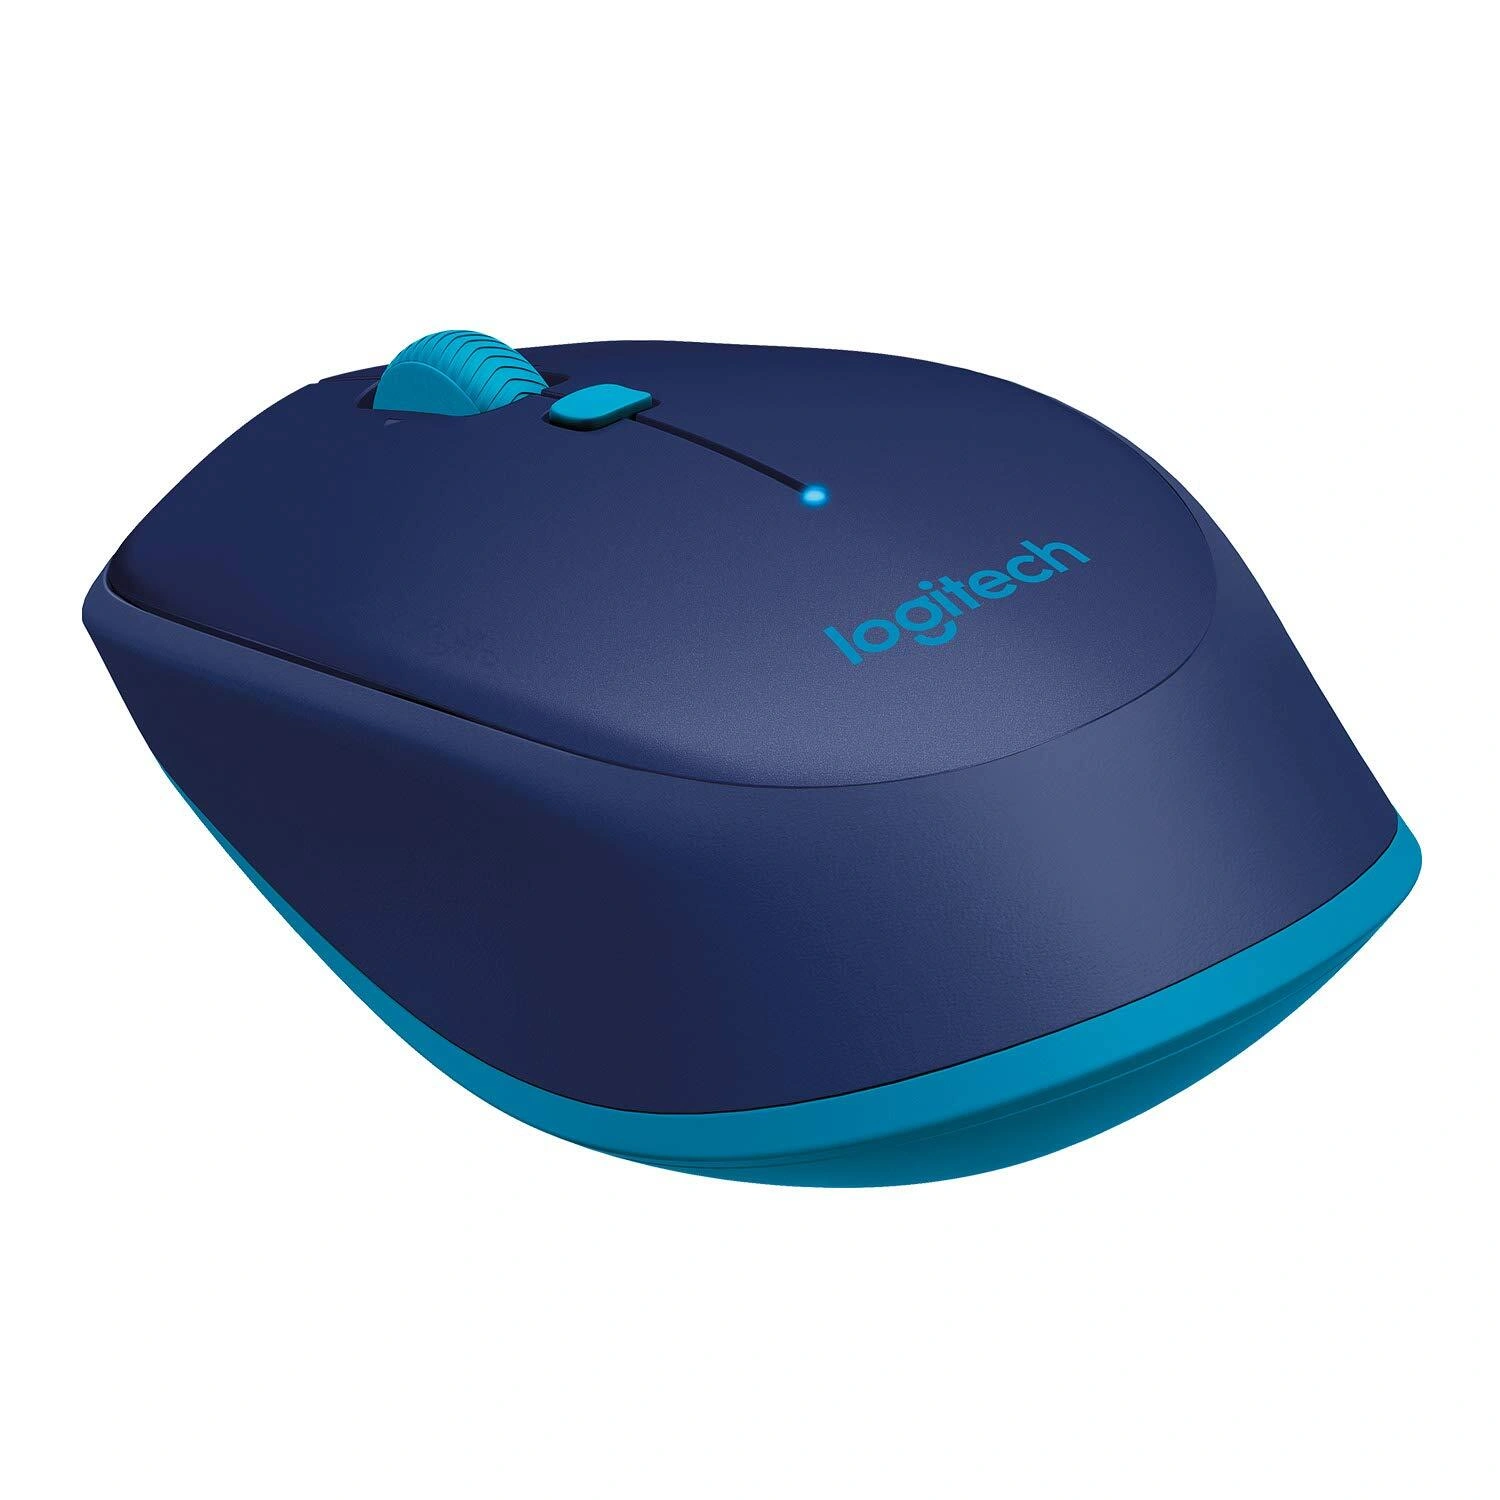 M337
Bluetooth mouse Blue-4